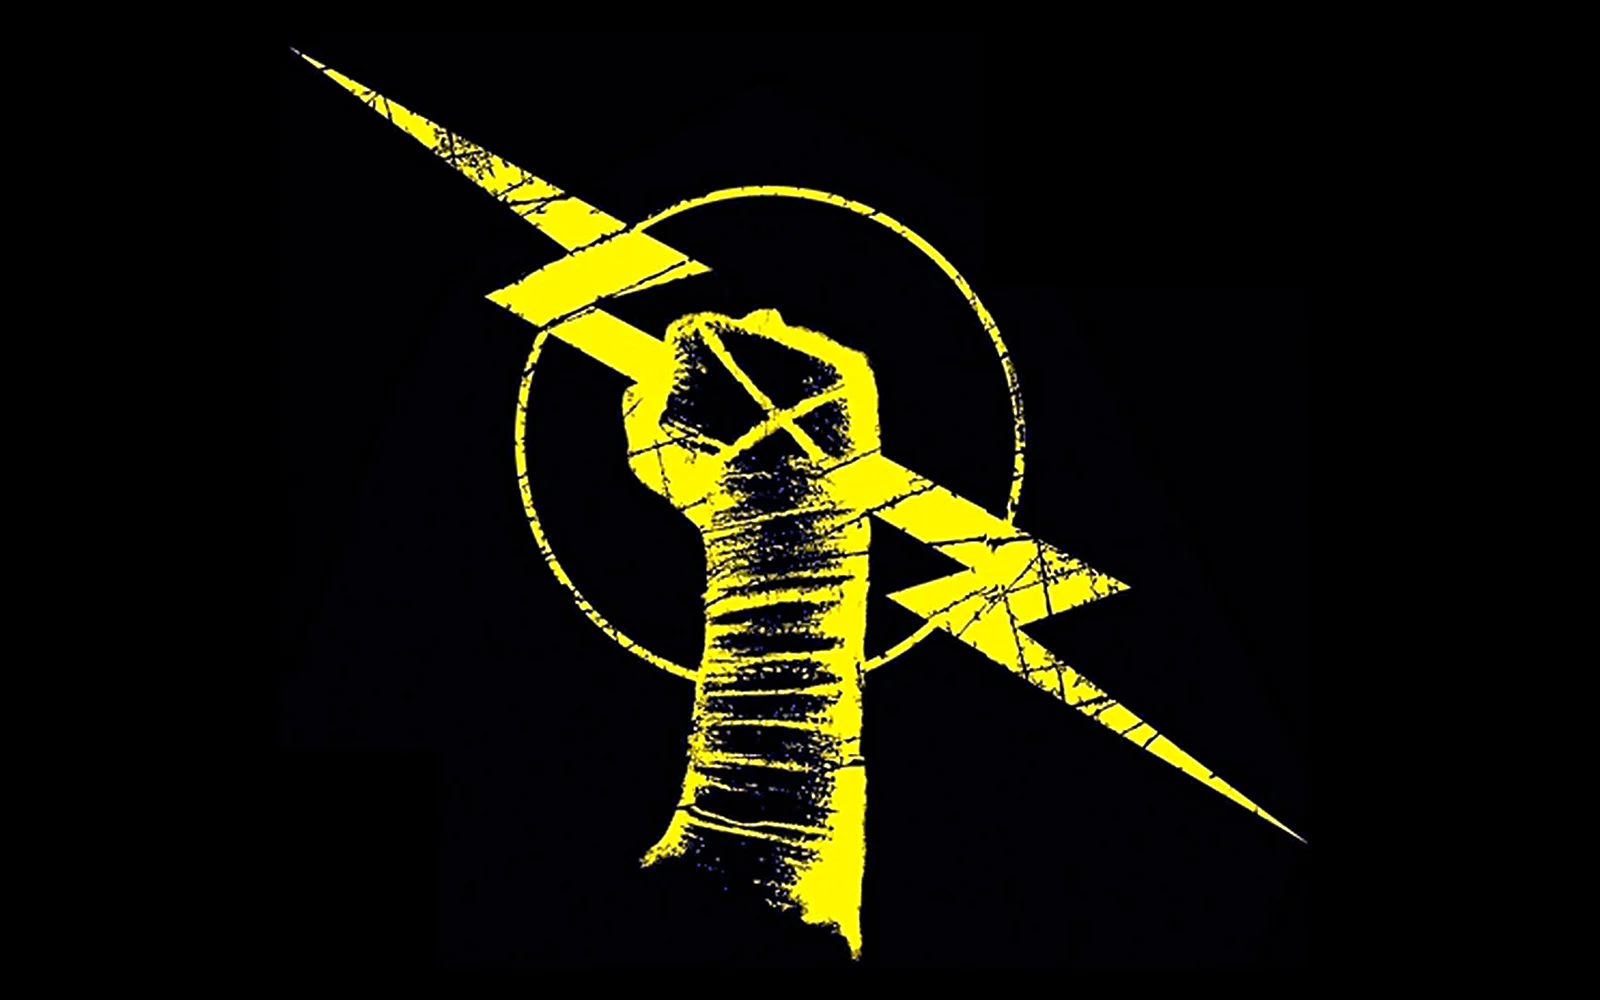 Cm Punk Logo Wallpaper